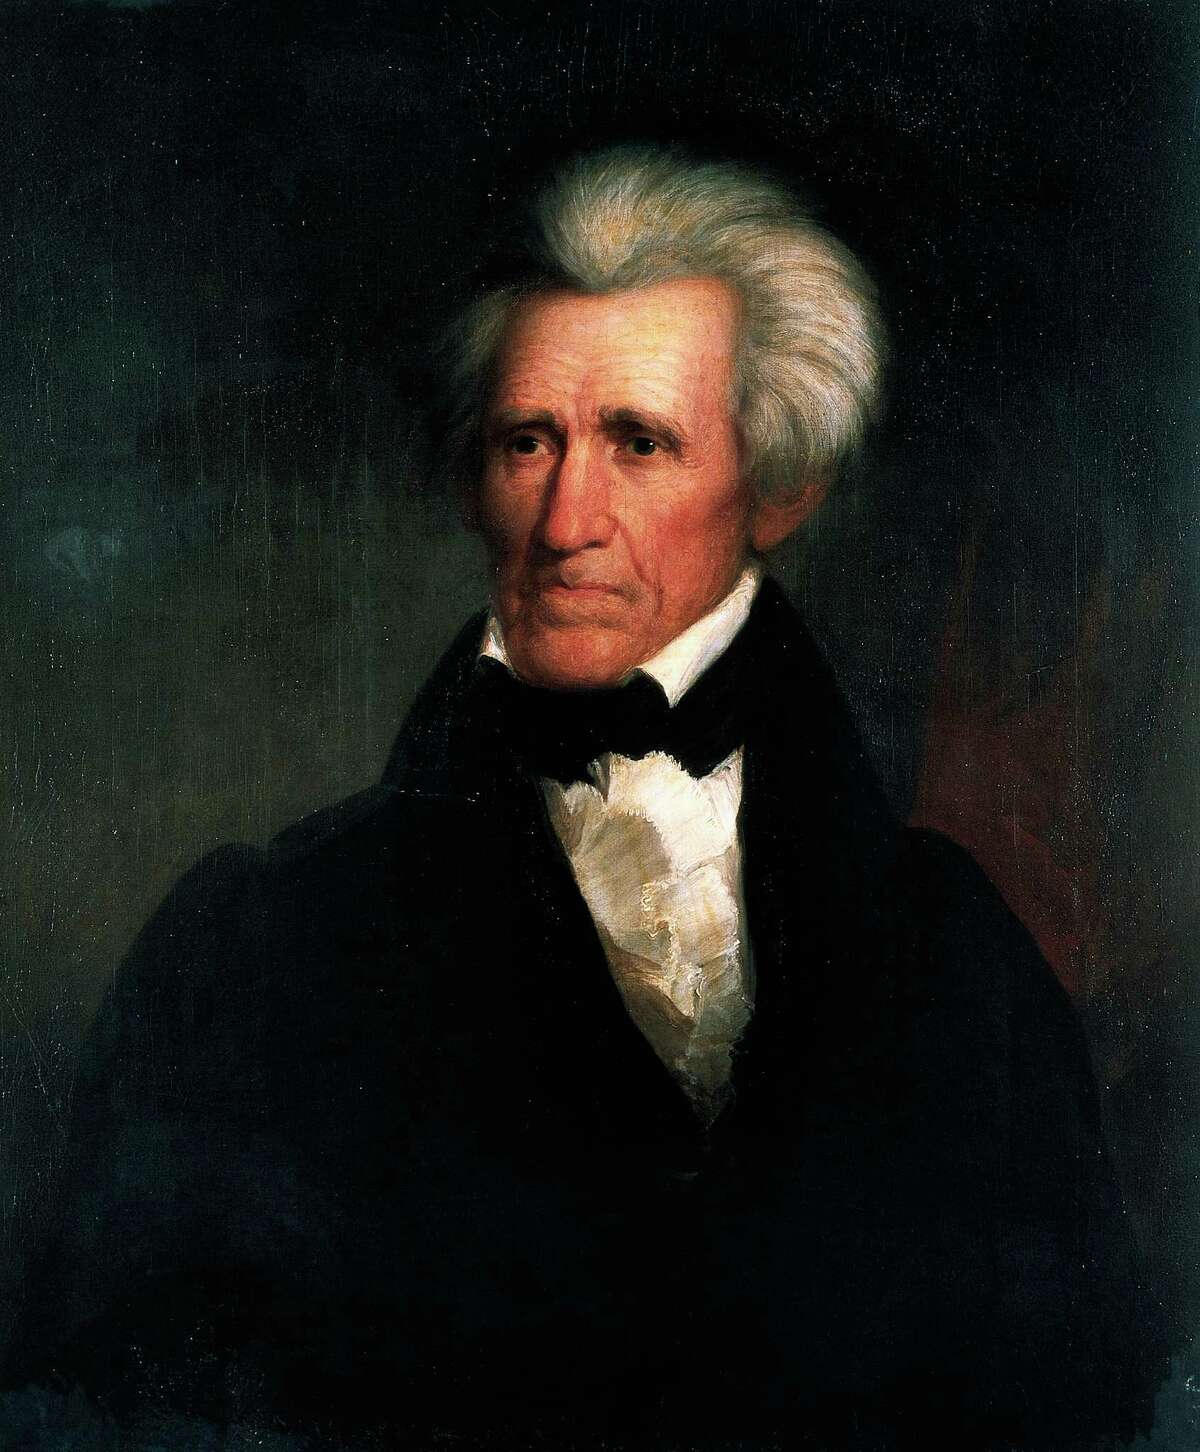 A portrait of Thomas Jefferson, shown left, circa 1901 (artist unidentified) and a